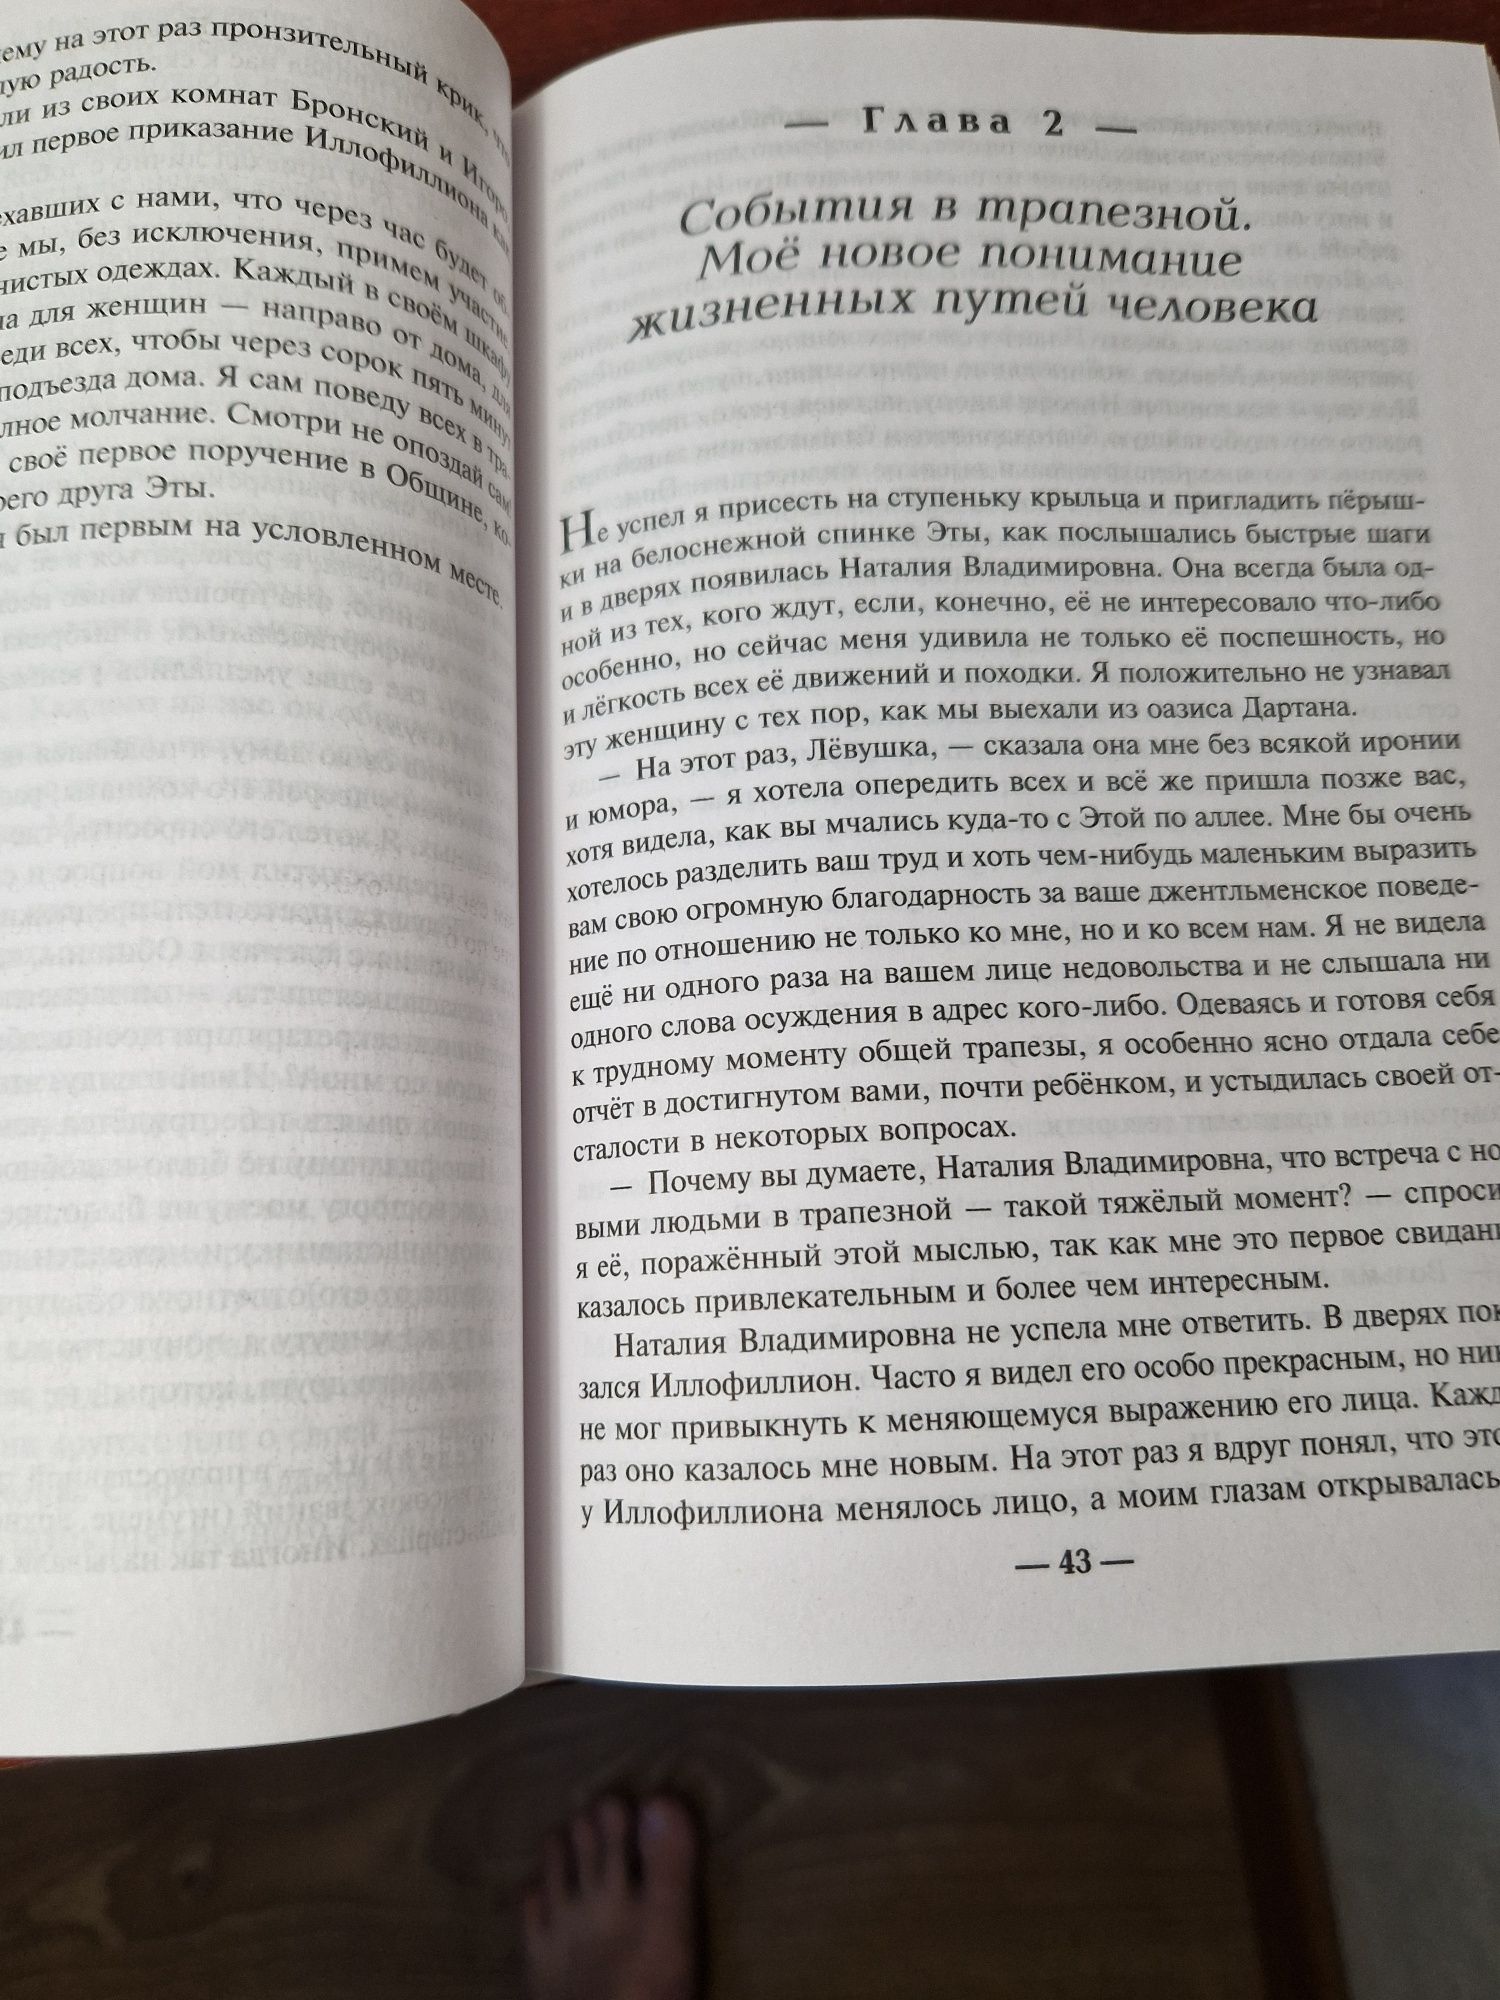 Продам книги К.Антарова "Две жизни"